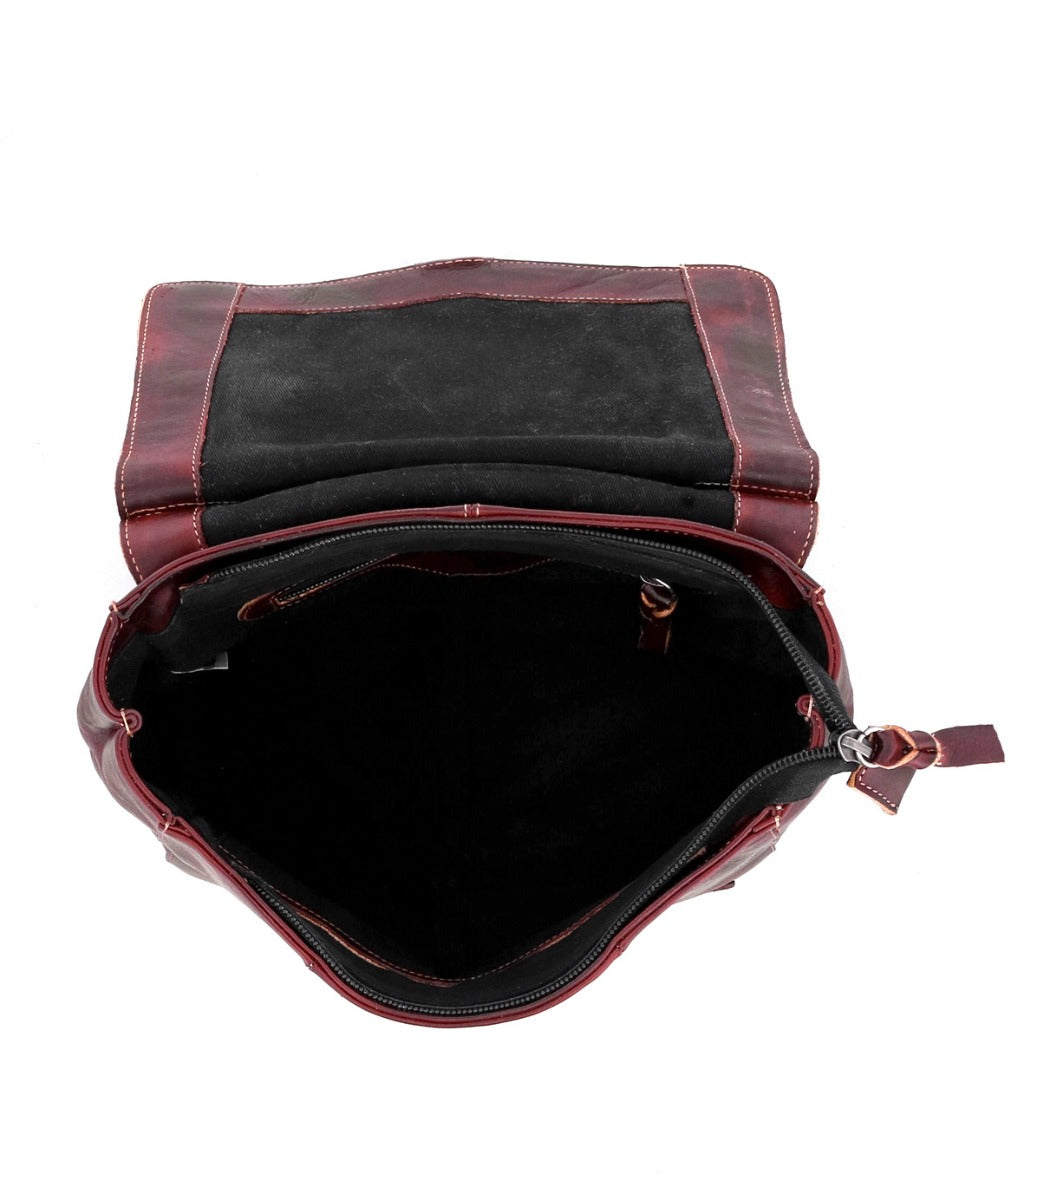 The inside of a Bed Stu Bathsheba burgundy leather bag.